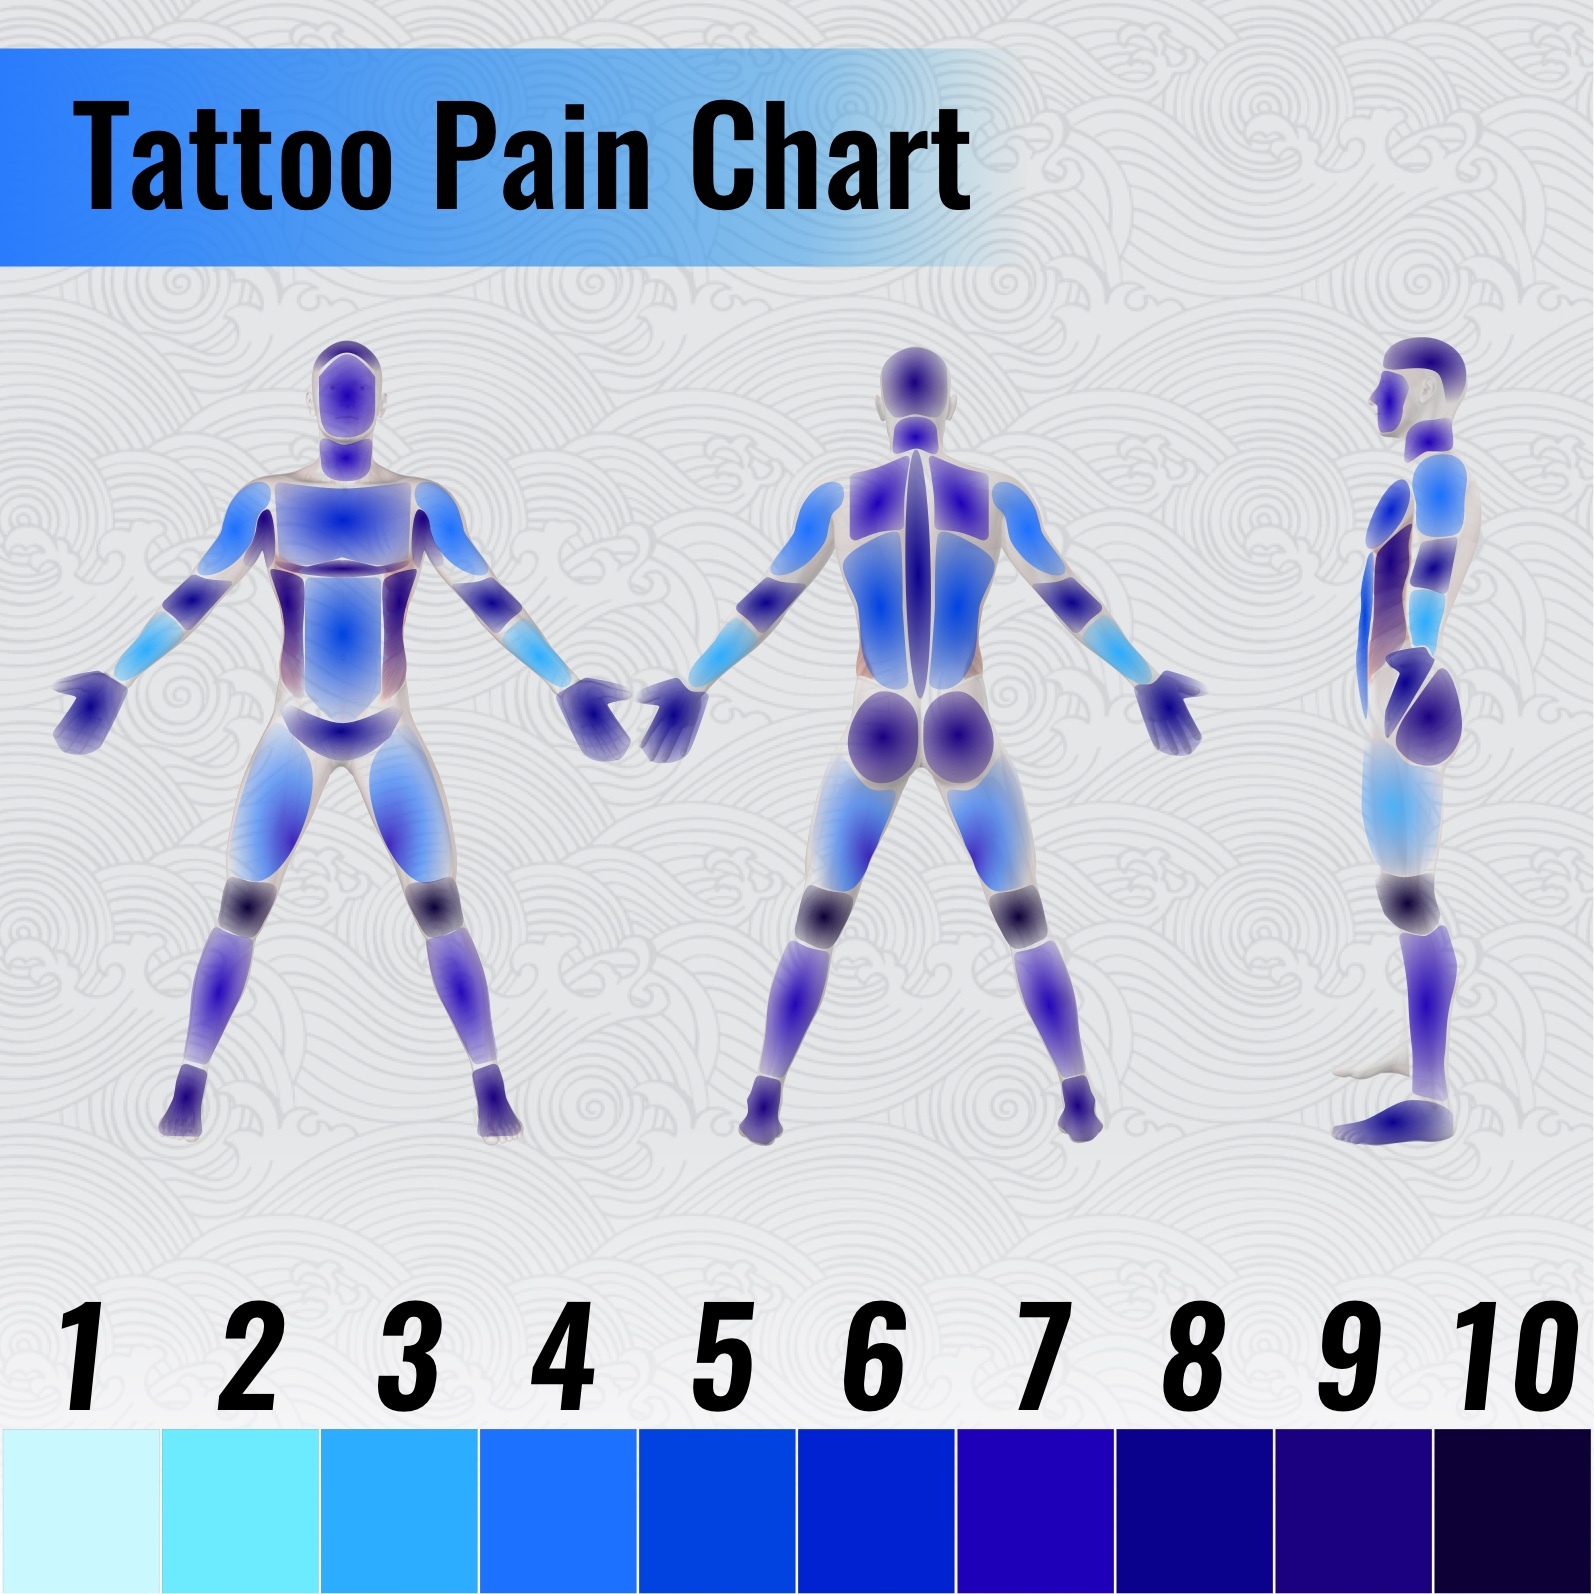 How Much does a Tattoo Hurt? | Tattoo Pain Chart | Saniderm